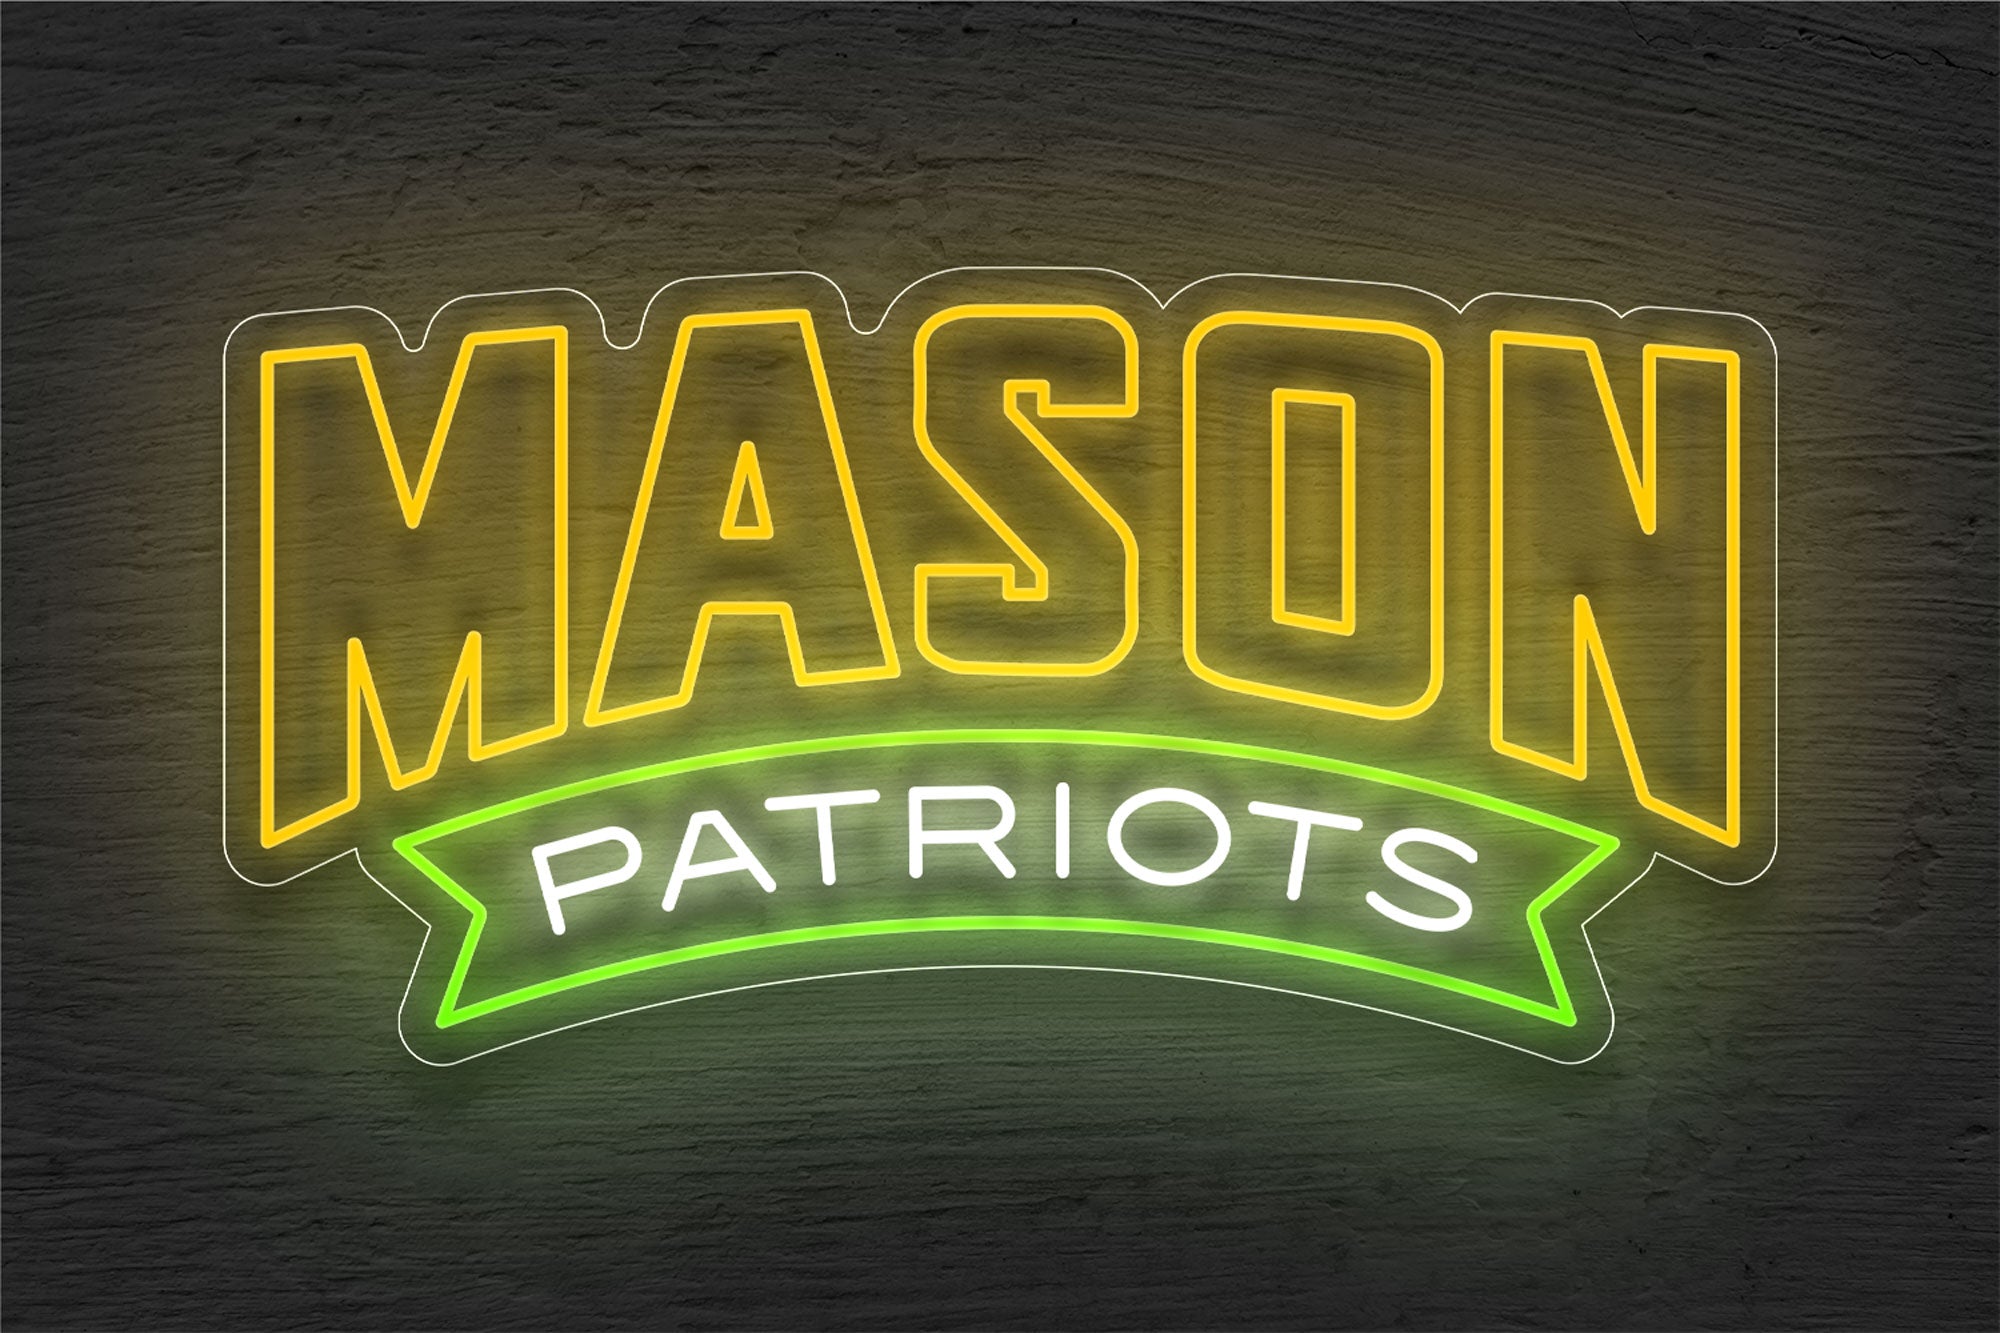 George Mason Patriots Men's Basketball LED Neon Sign